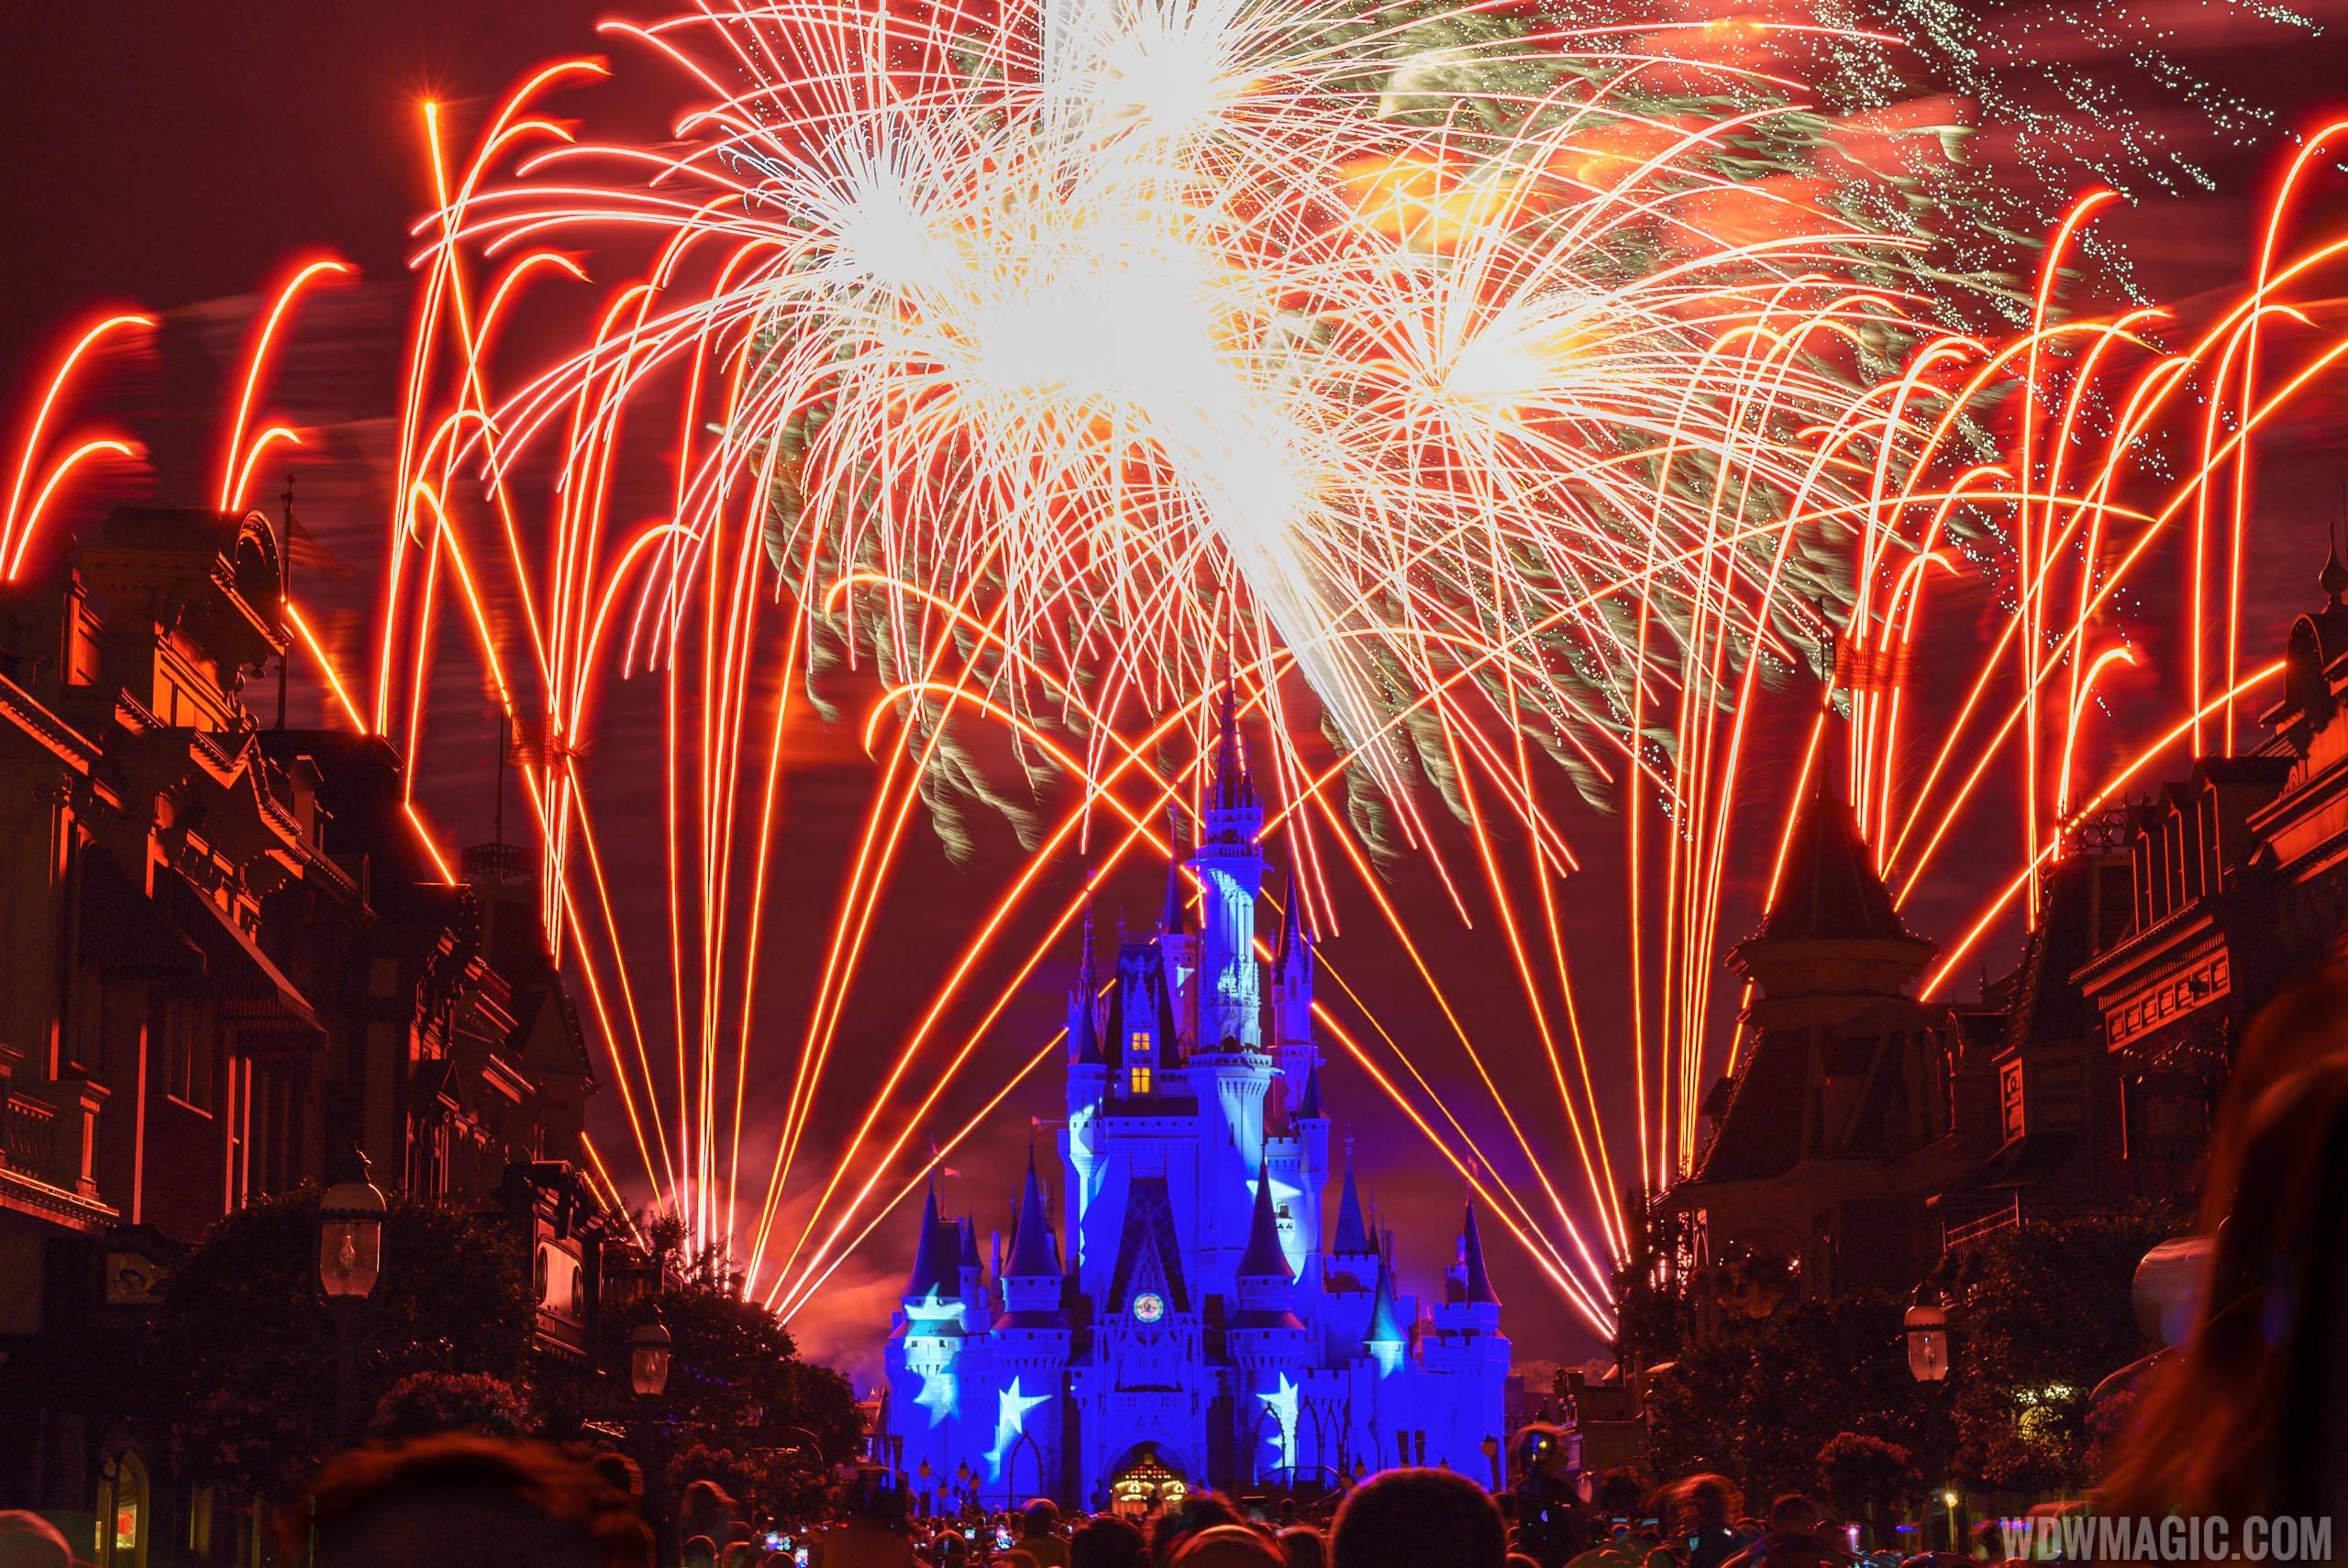 VIDEO - WDW Fireworks designer Brad Cicotti gives a glimpse backstage at Disney's firework shows